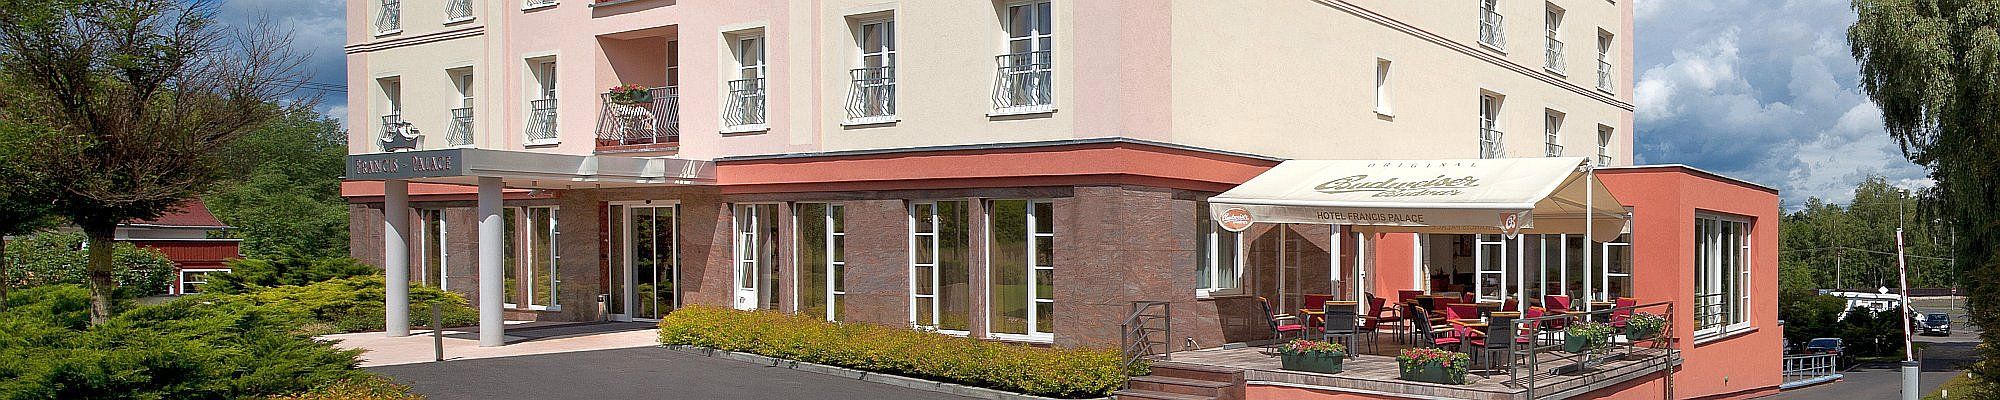 Francis - Palace Spa & Wellness Hotel - Kururlaub in Franzensbad mit Haustürabholung